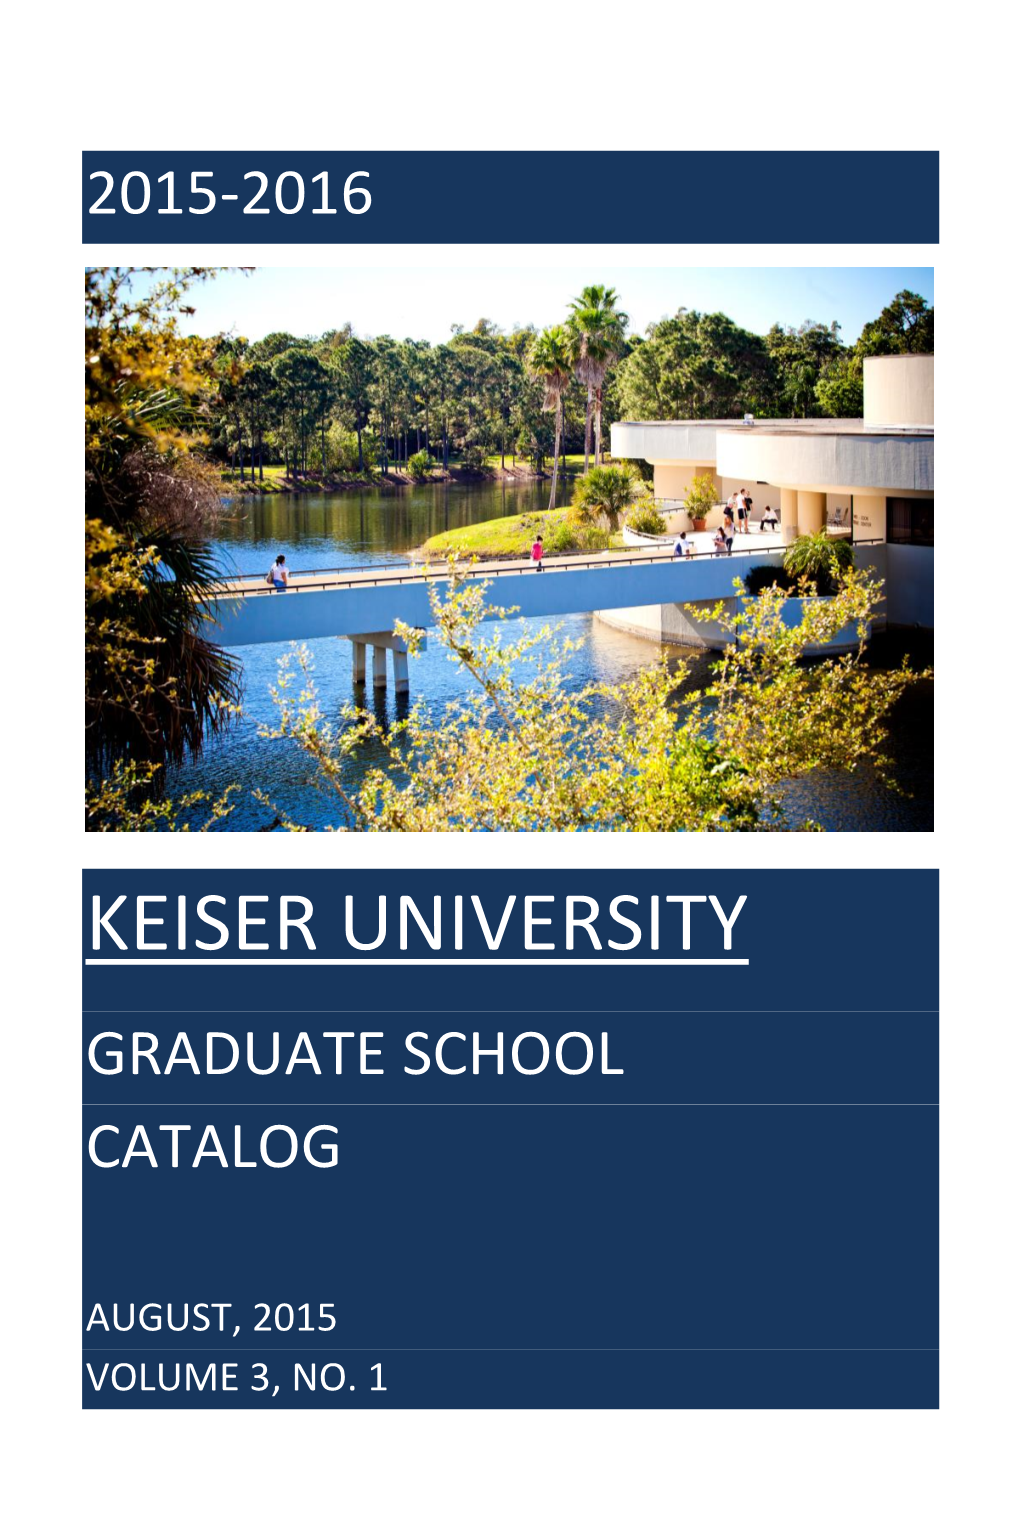 Keiser University Graduate School Catalog